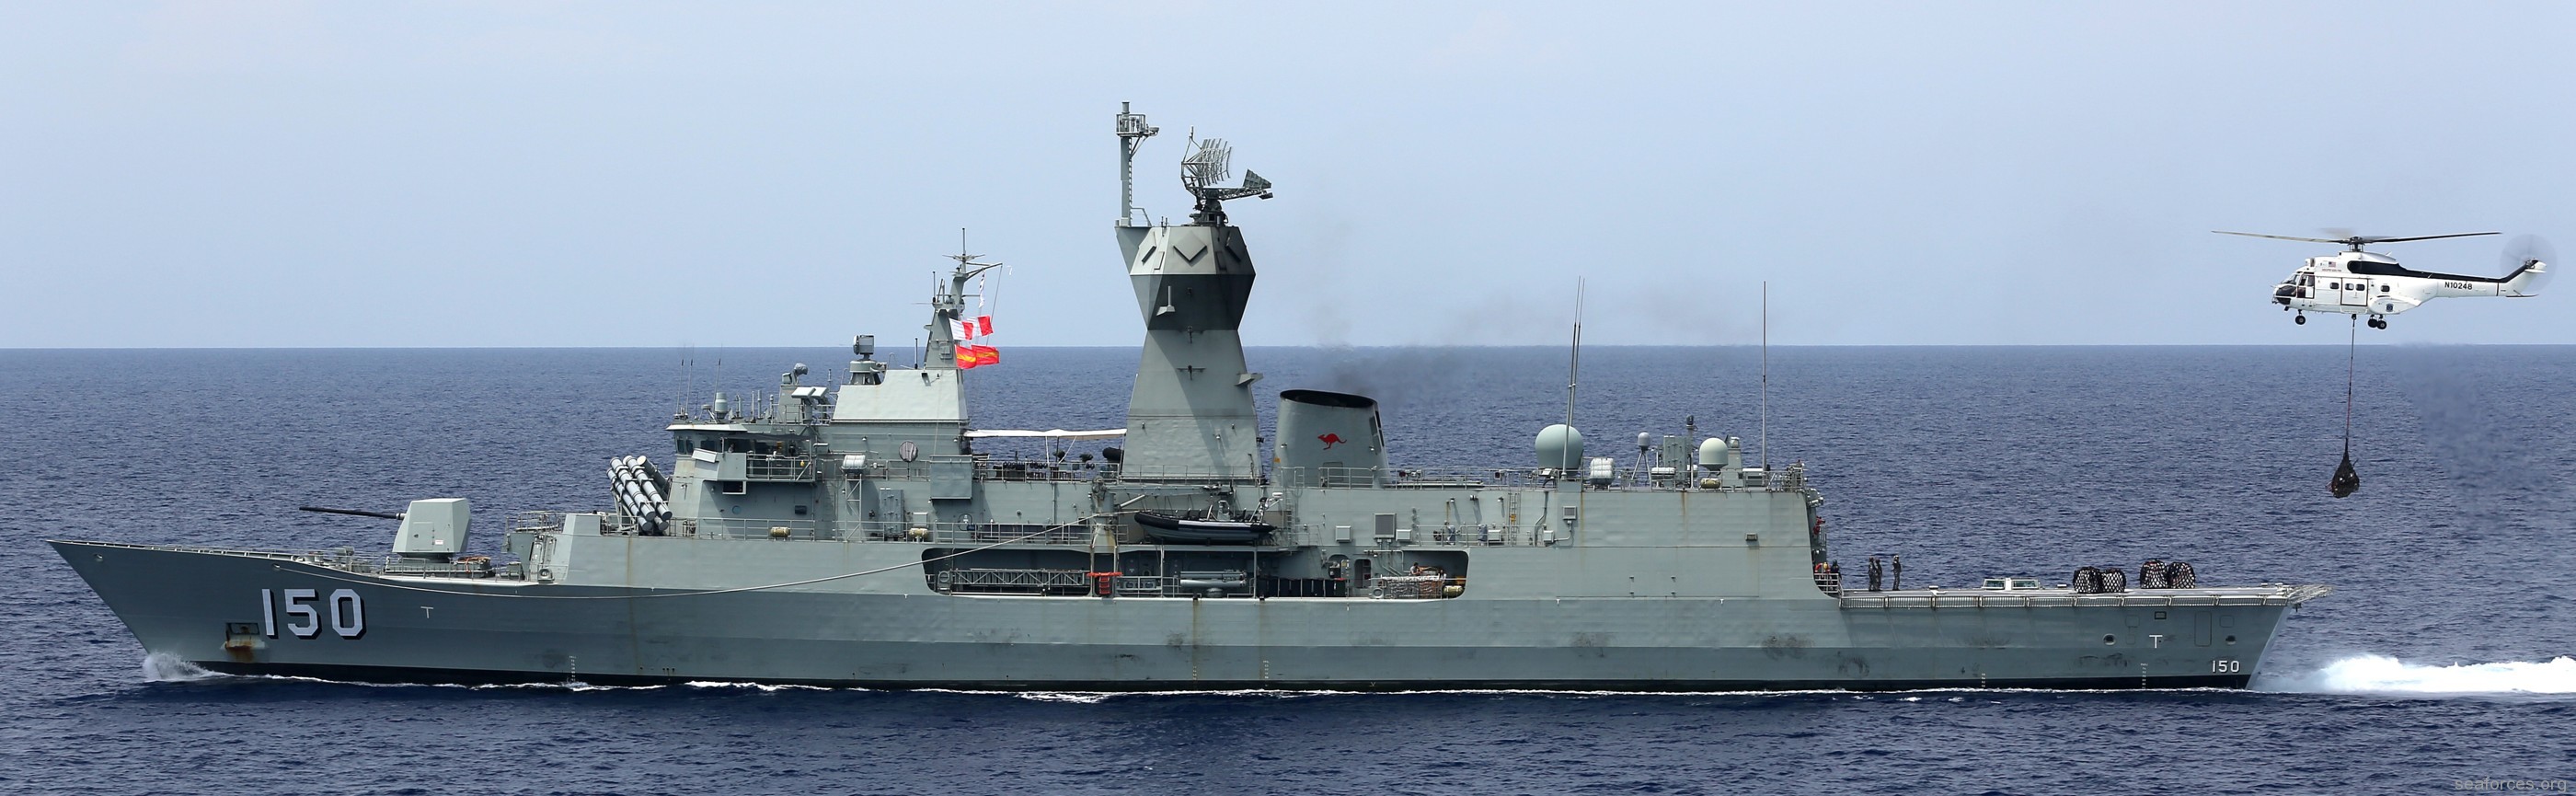 ffh-150 hmas anzac frigate royal australian navy 09